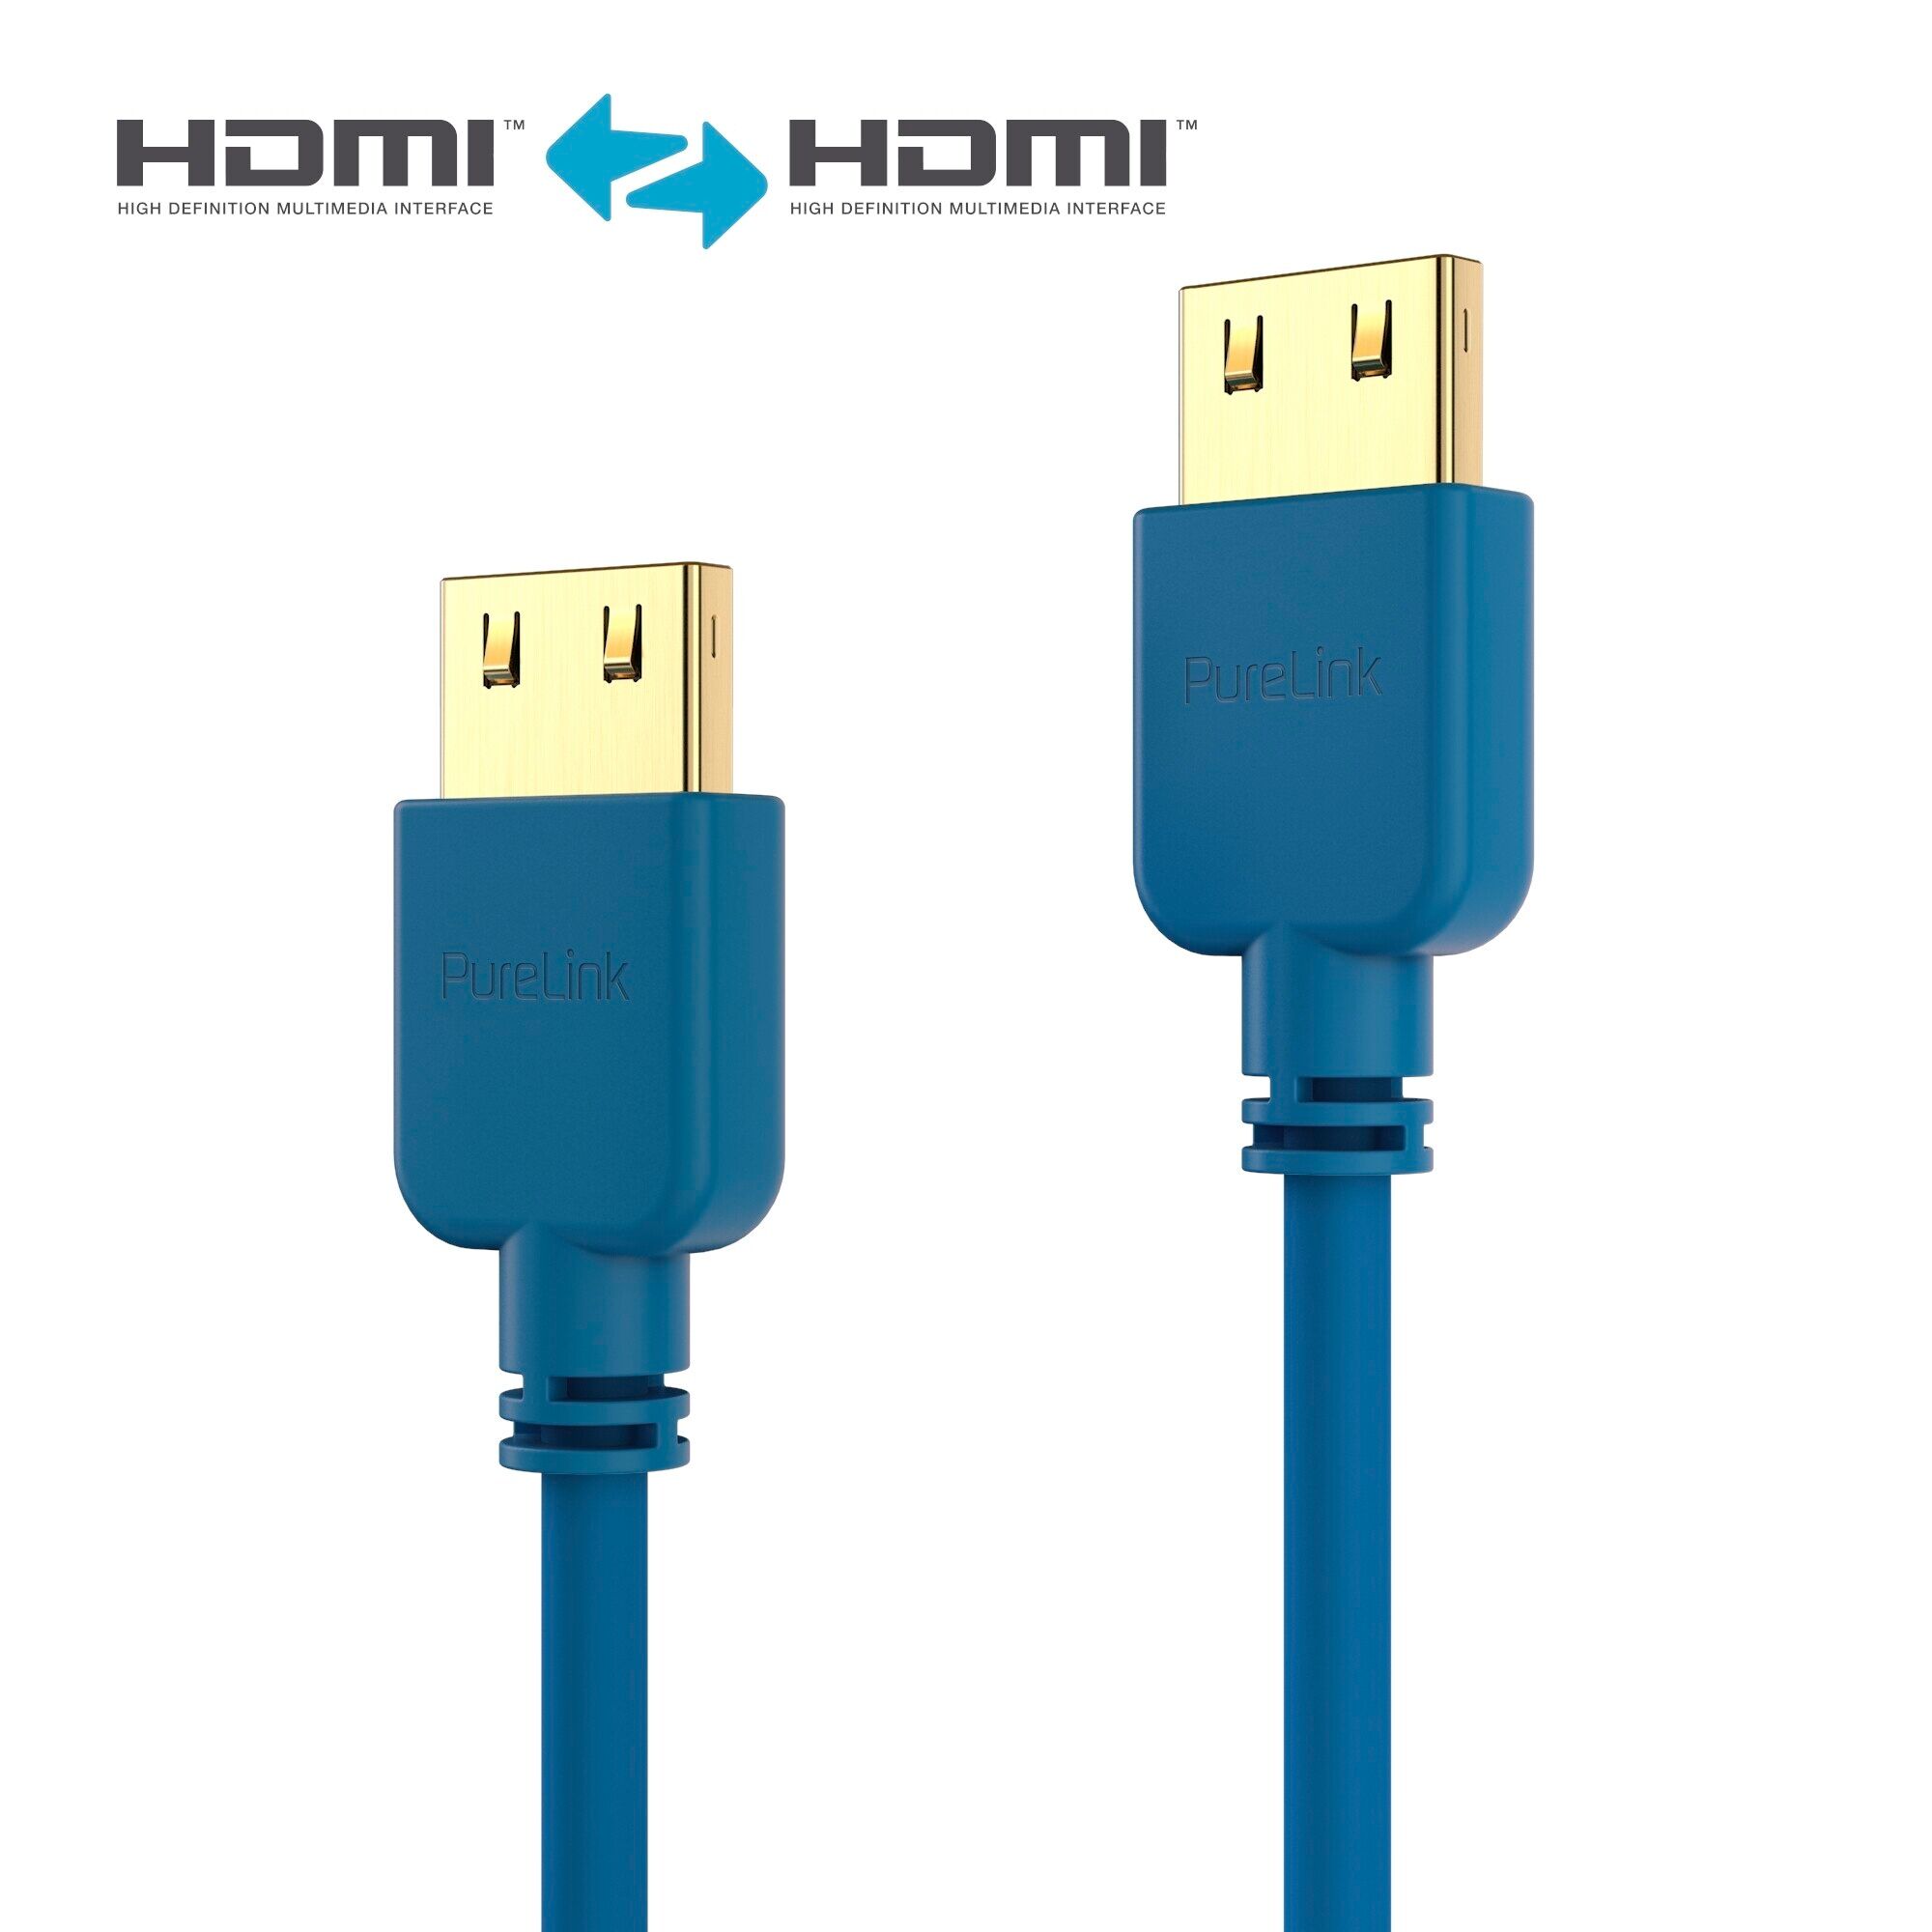 Purelink PI0502-020 HDMI Kabel SuperThin 2m blau